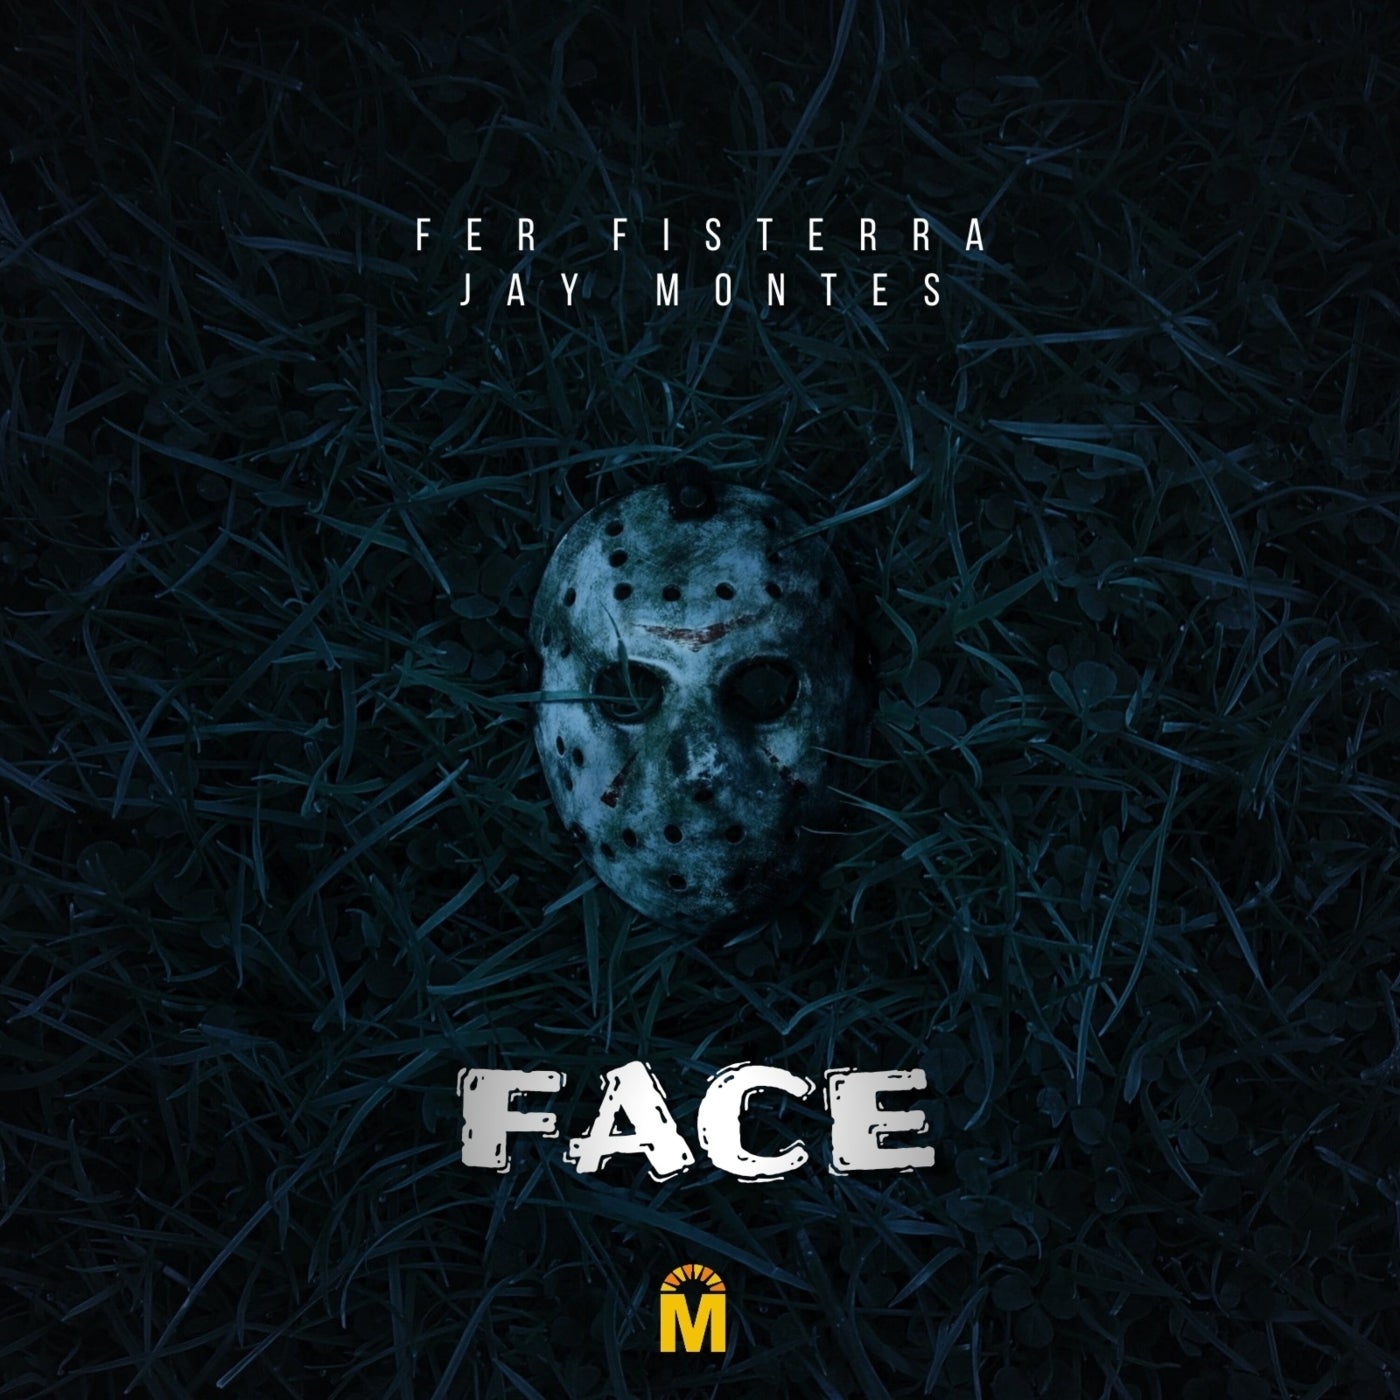 Face